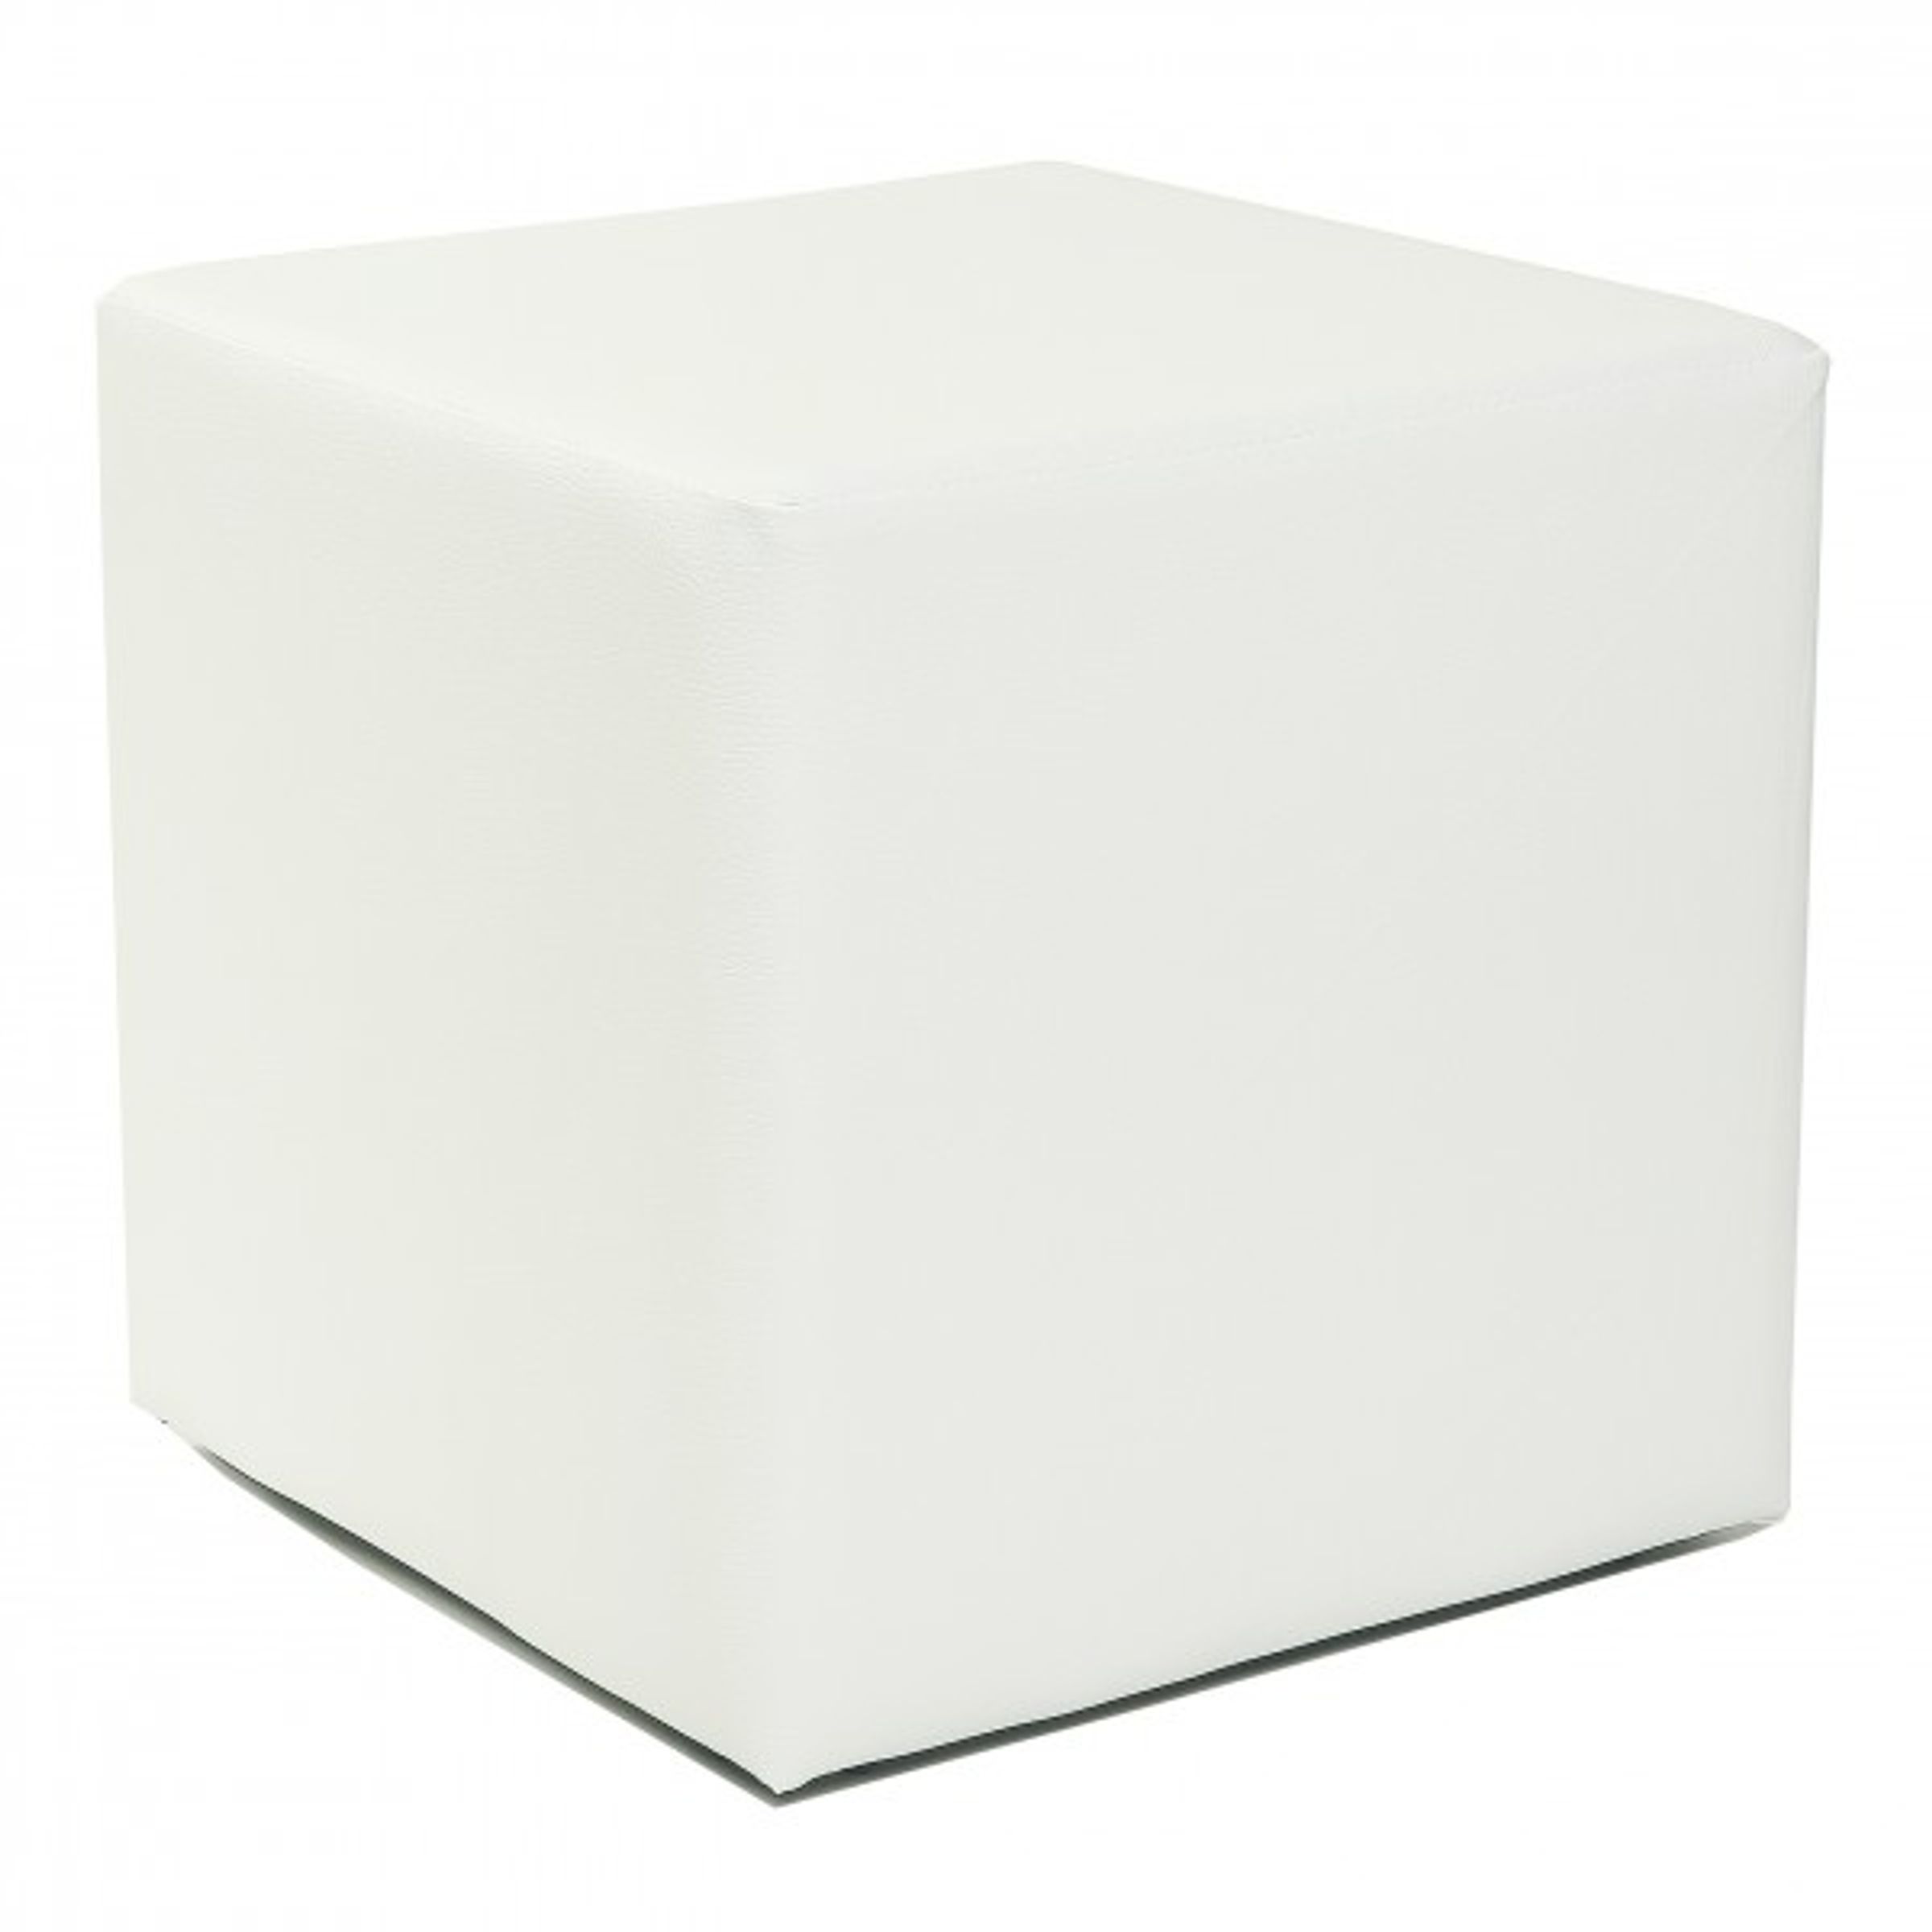 Sitzwürfel Sitzhocker Hocker Würfel Cubes Messe 35 cm x 35 cm x 42 cm Braun Neu